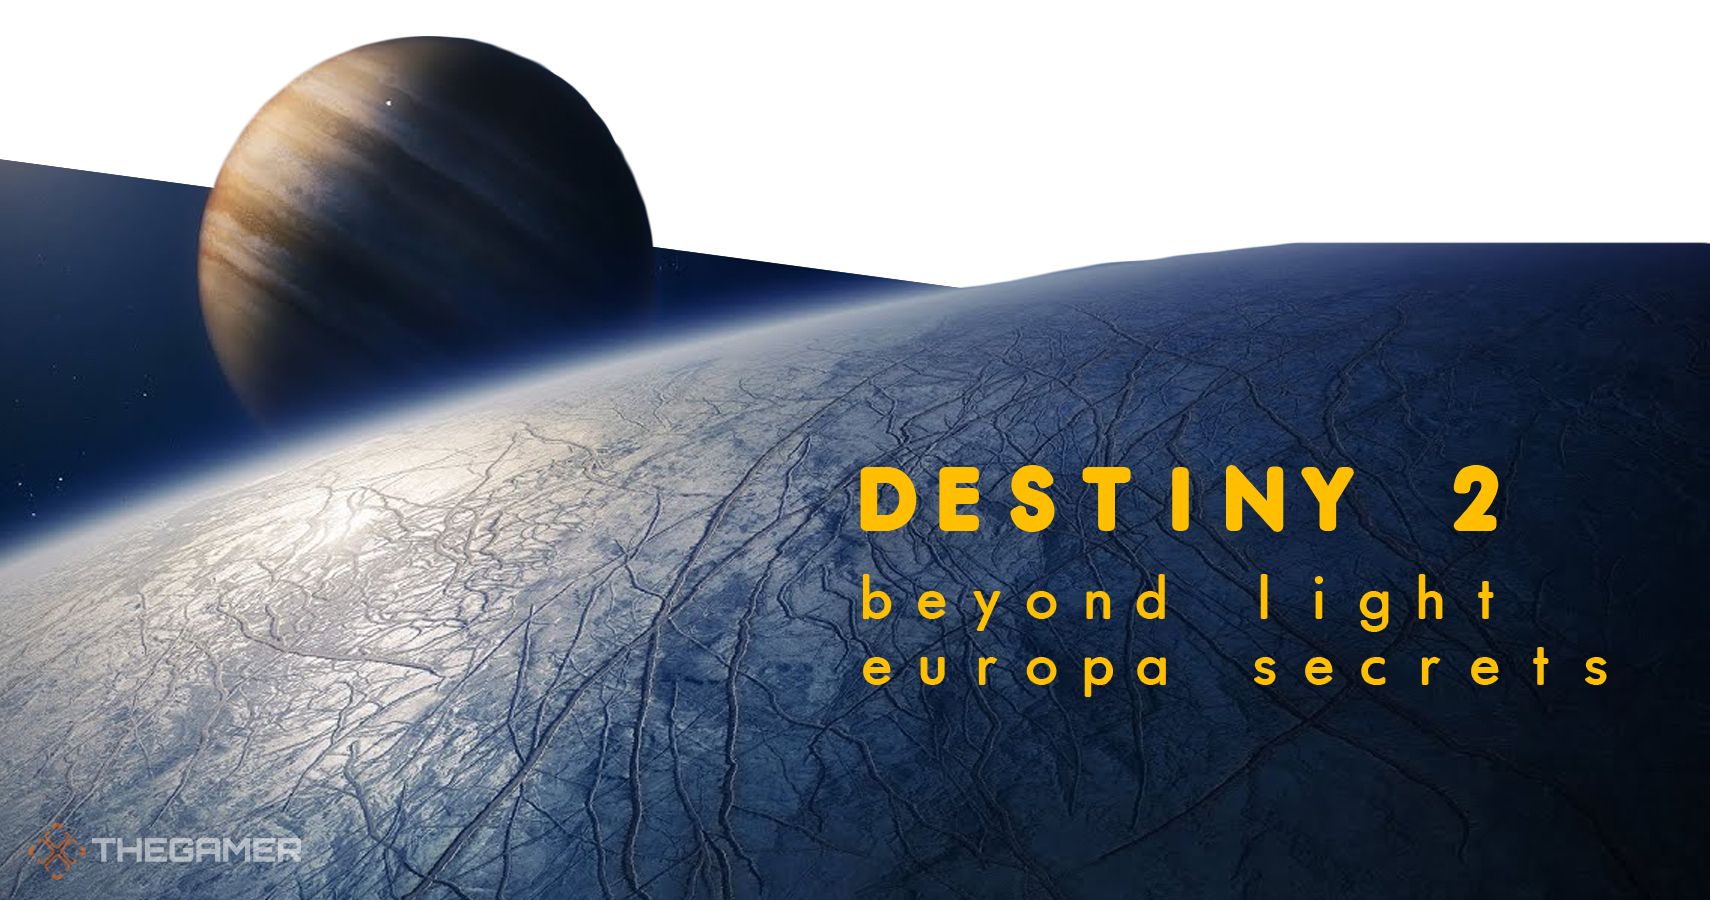 Destiny 2 beyond light europa secrets